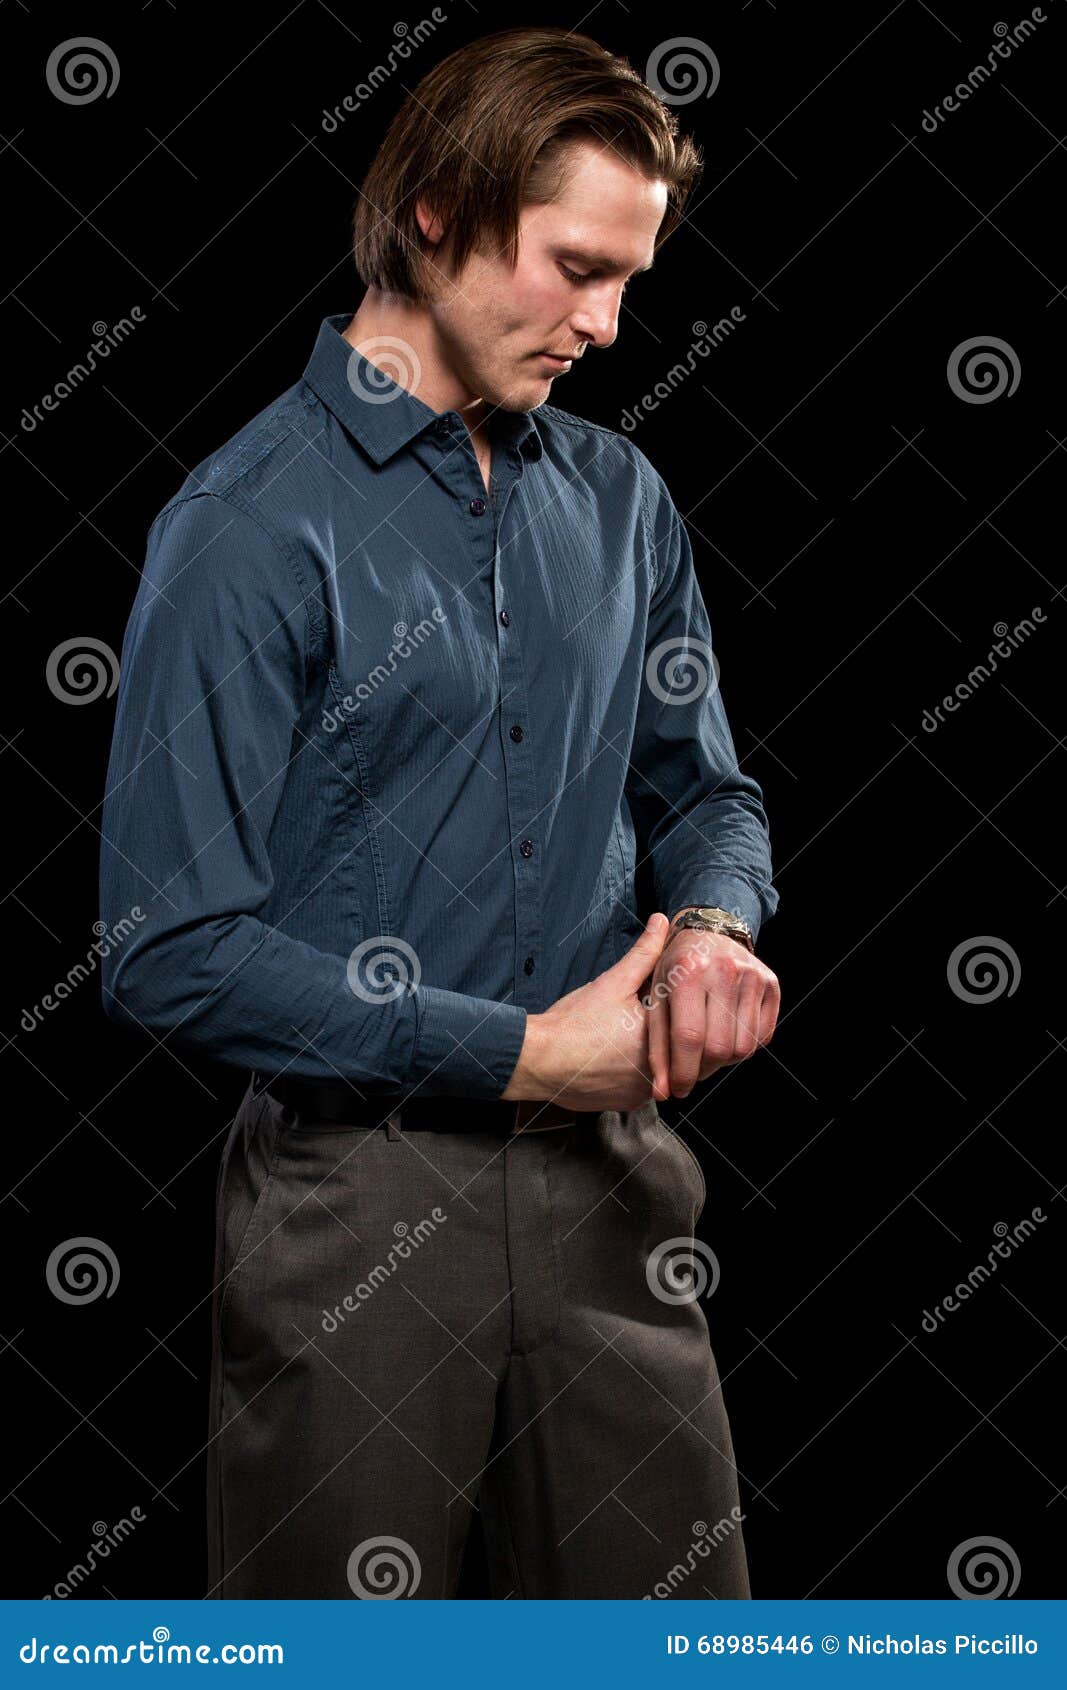 man in blue shirt and grey slacks